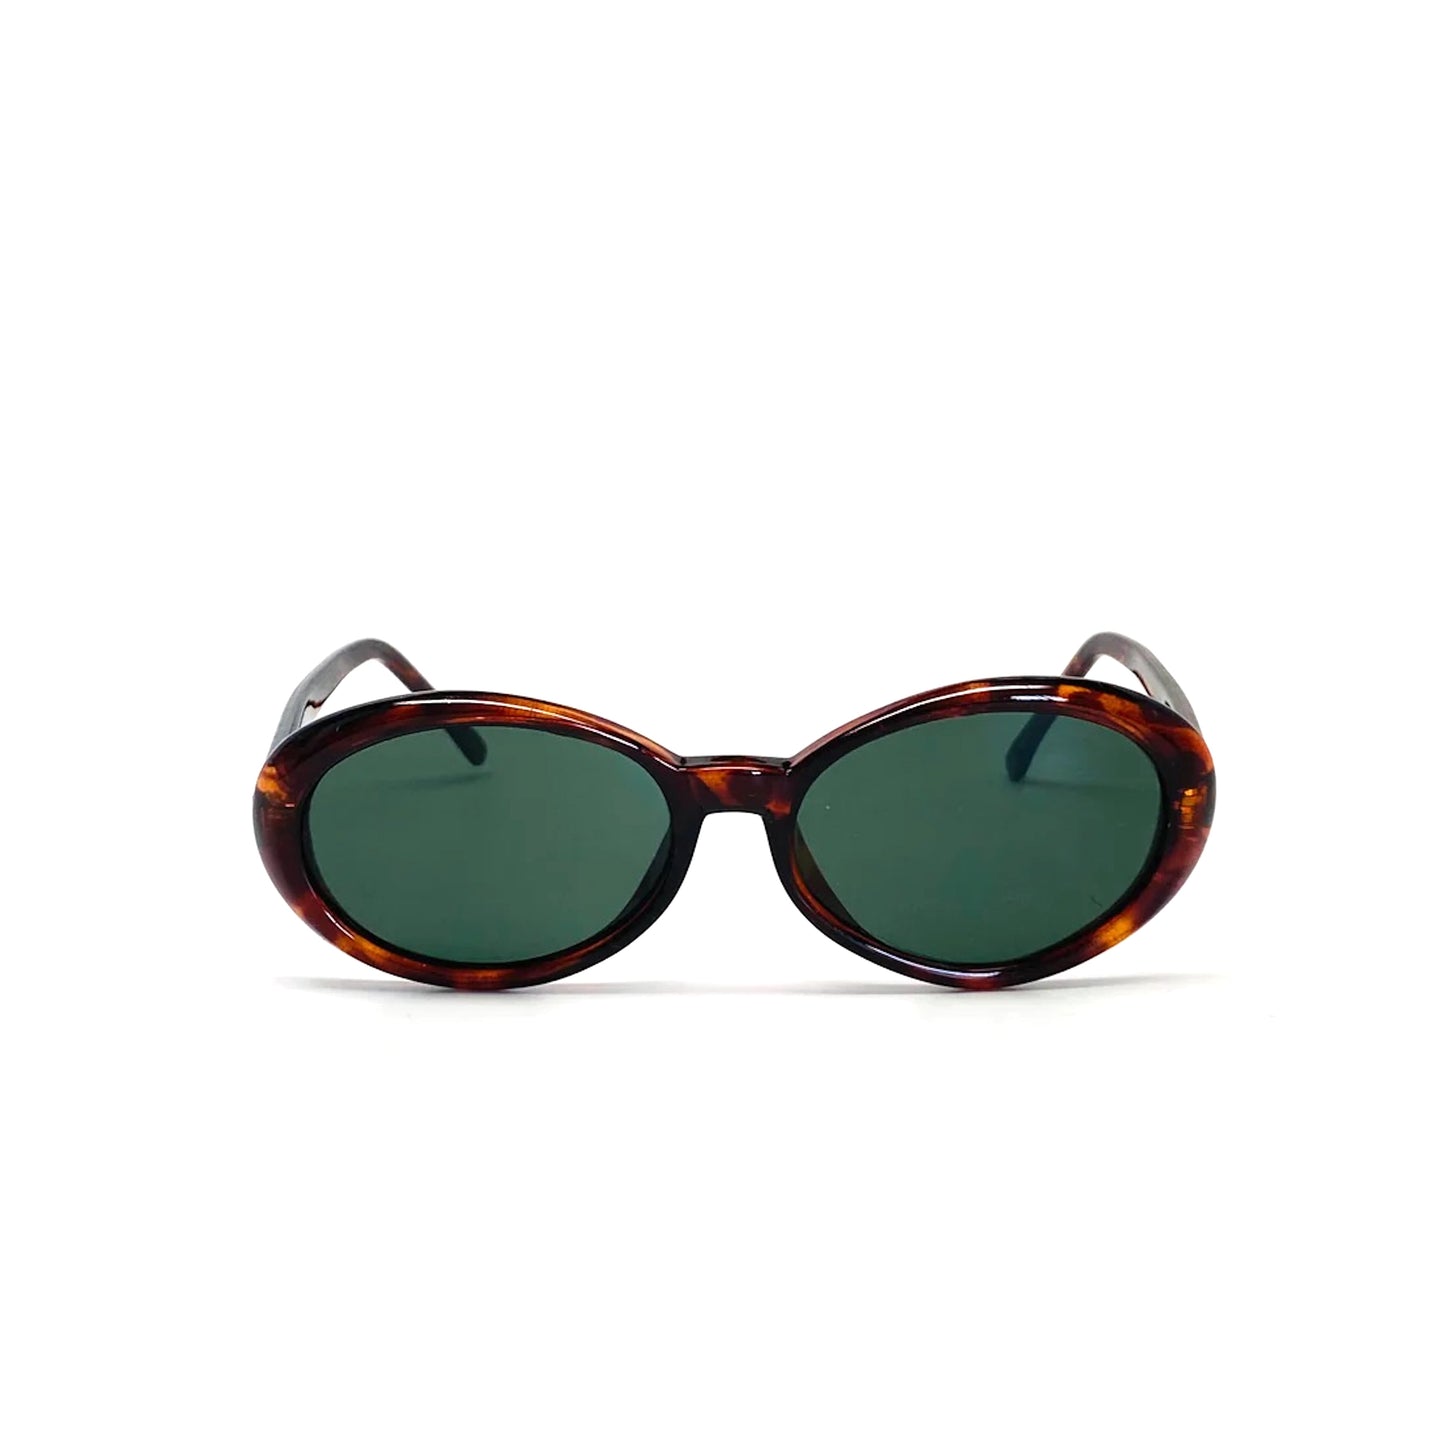 Vintage Standard Size 90s Mod Original Hermosa Oval Sunglasses - Tortoise